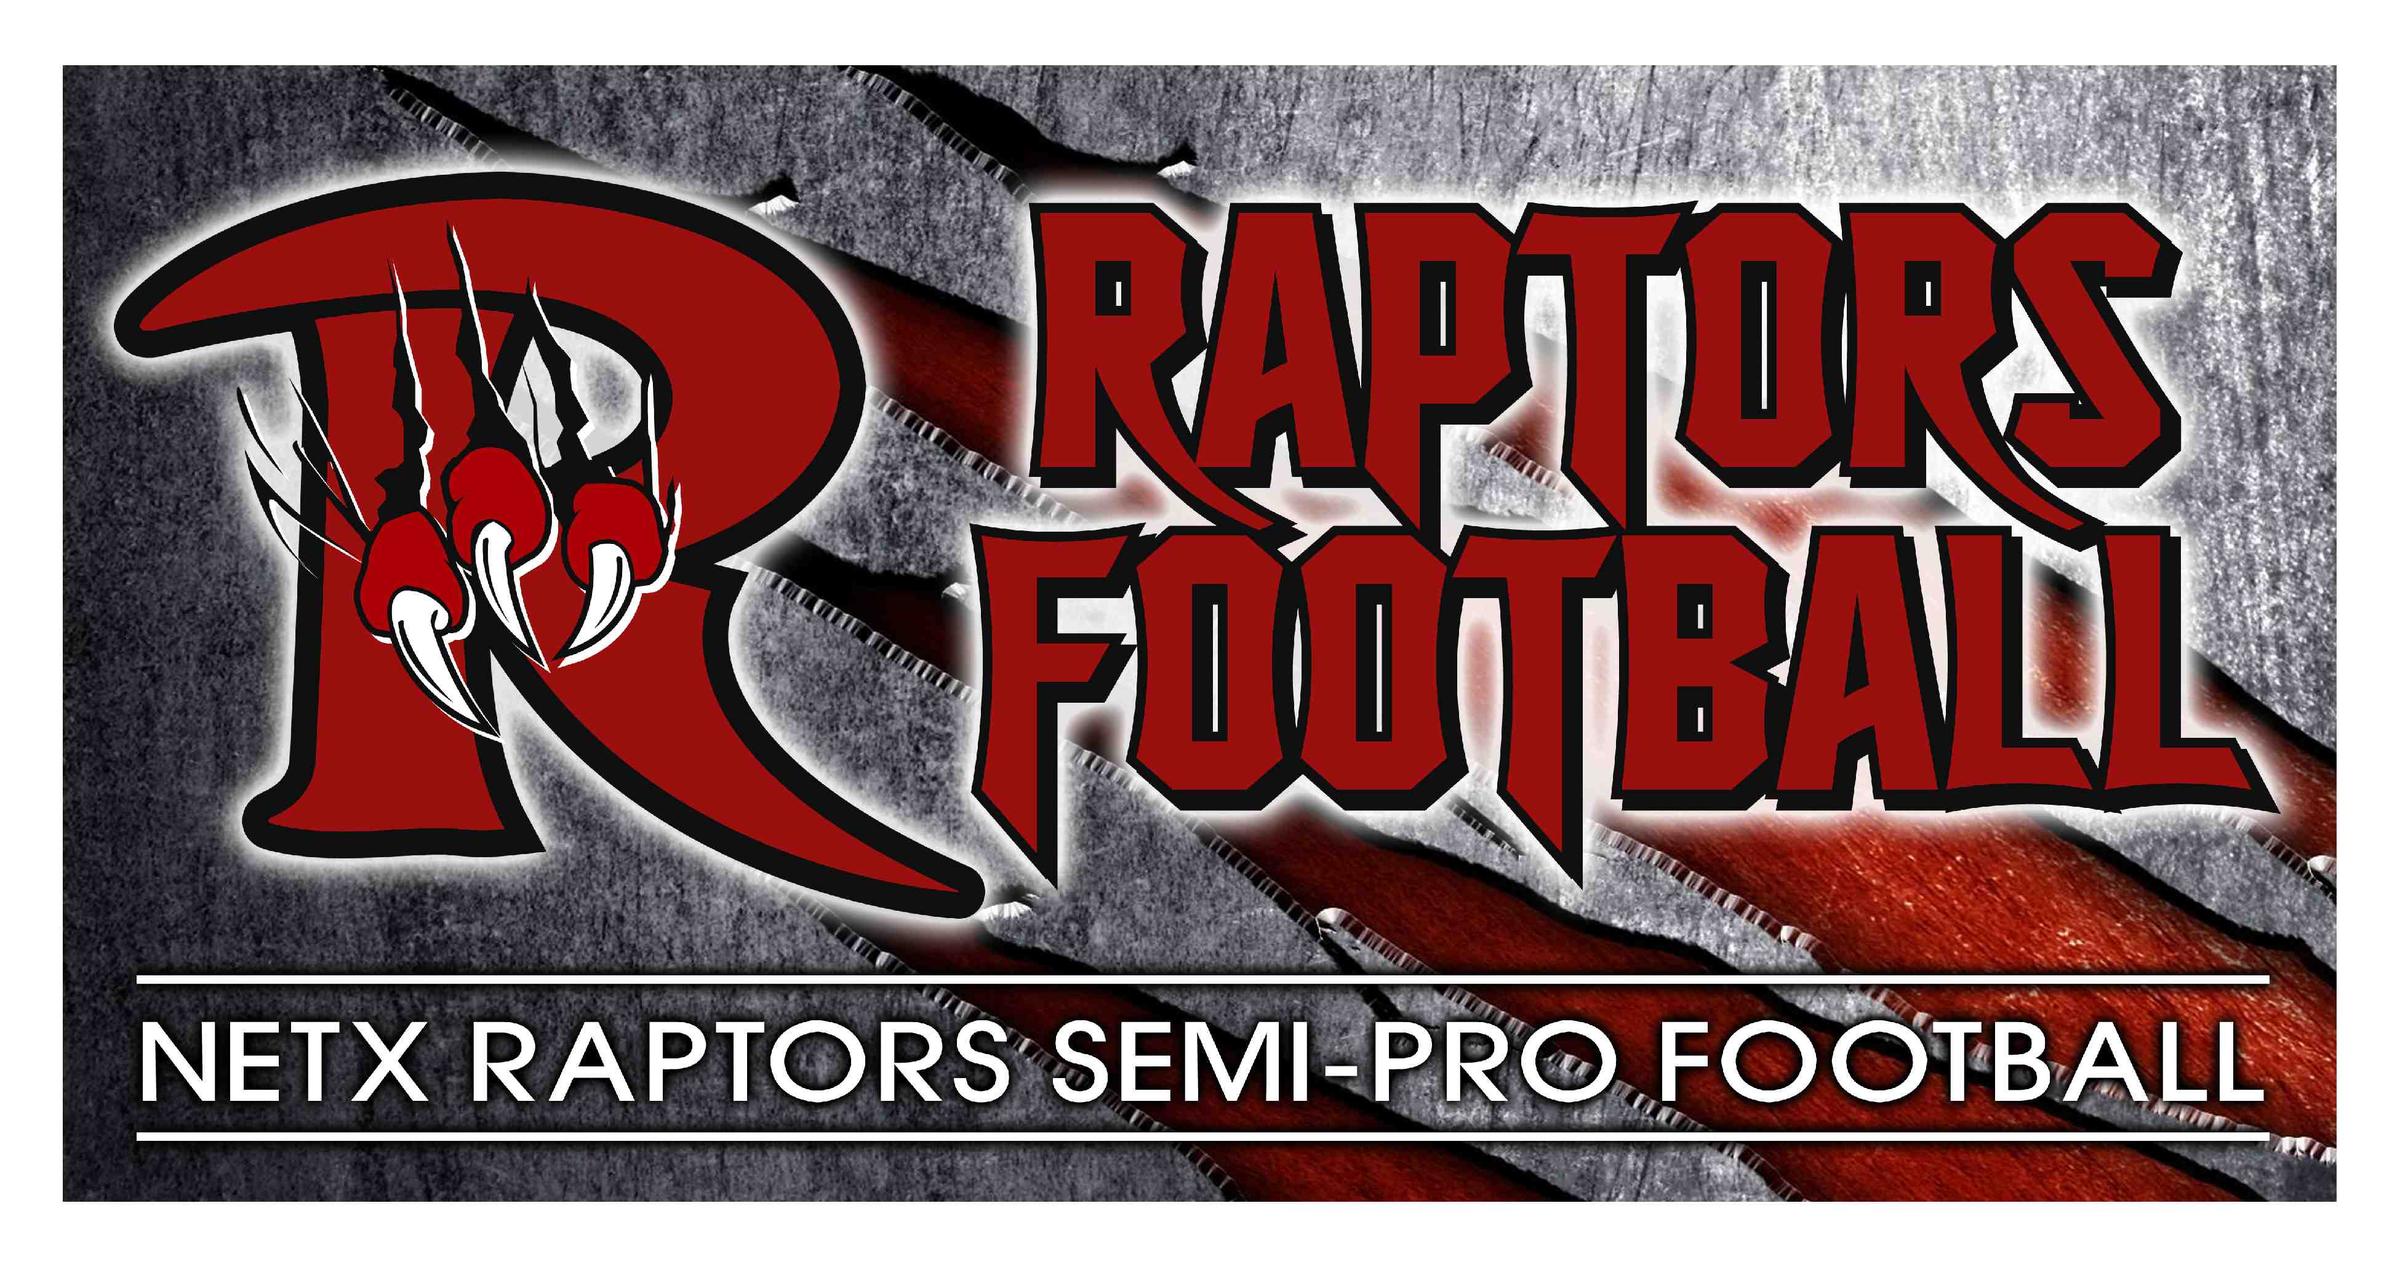 NETX Raptors Semi-Pro Football Team Looks To Make Cooper ...